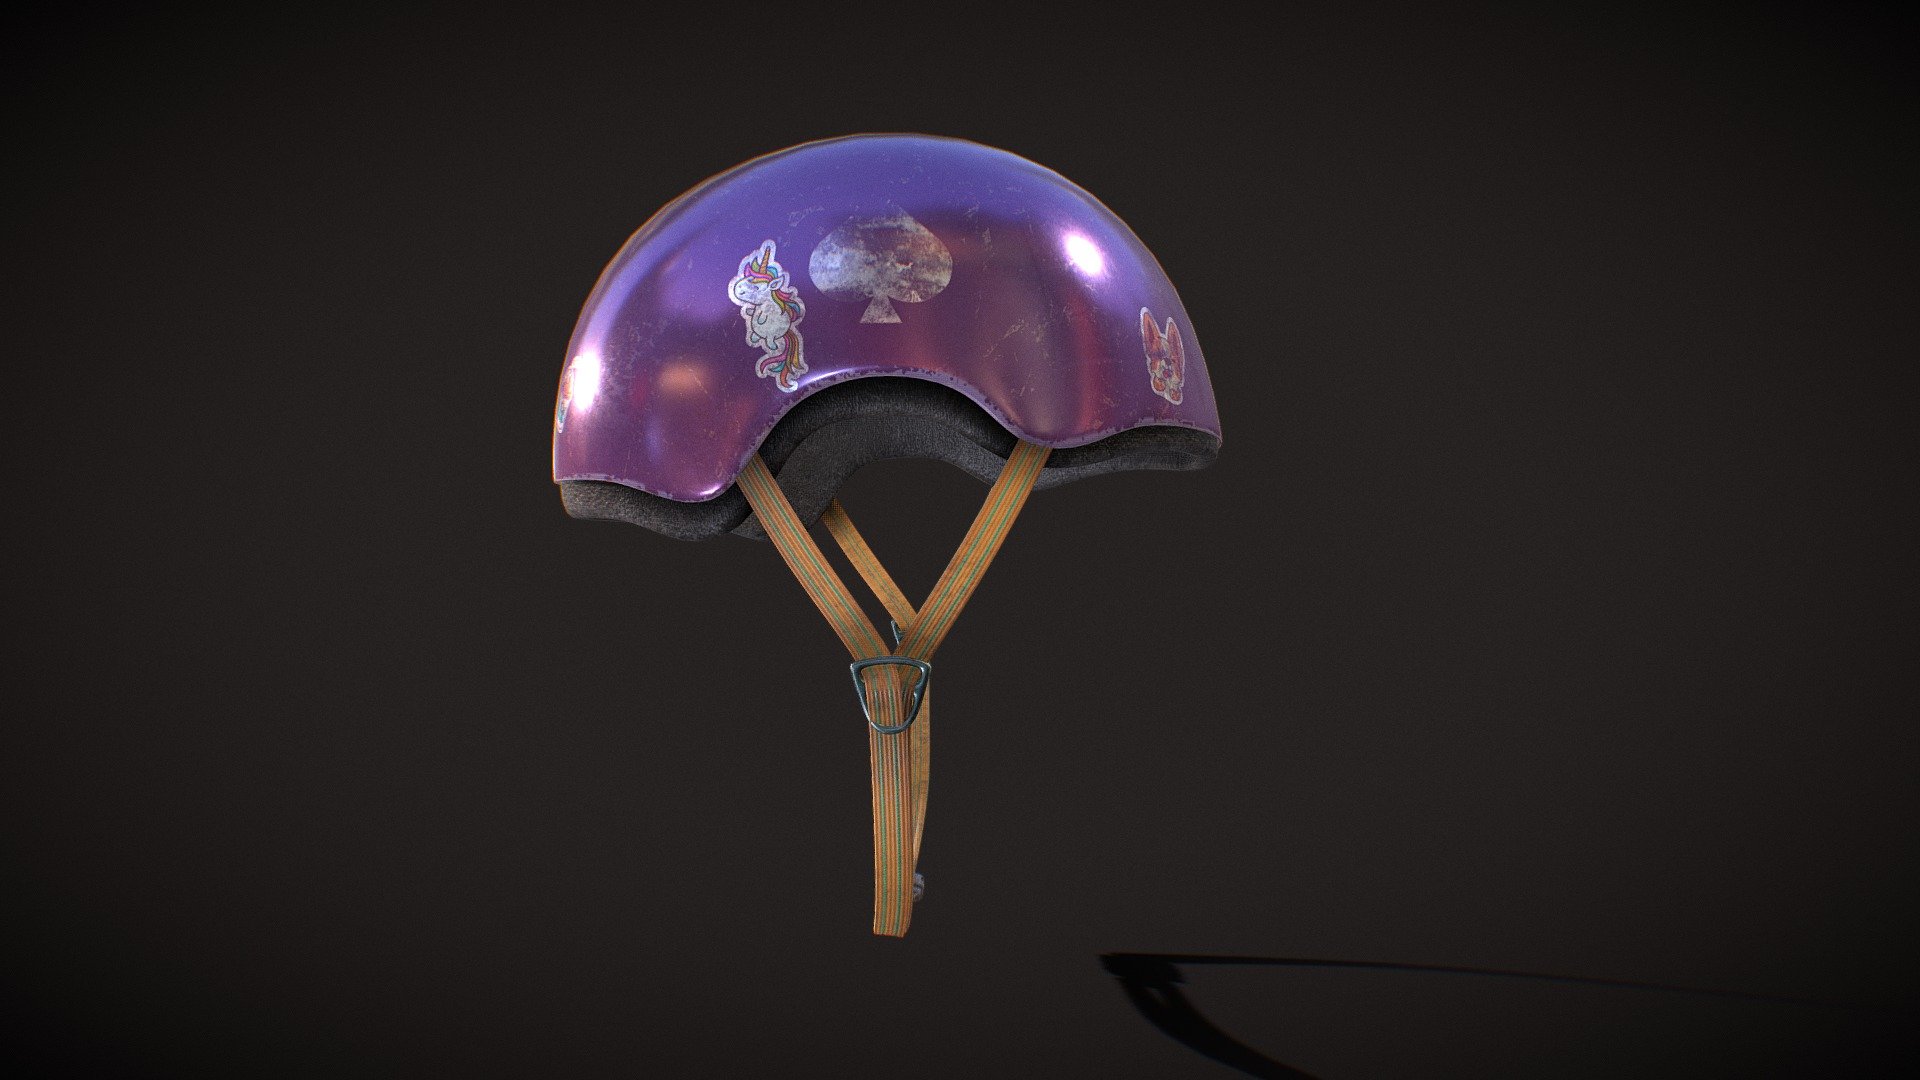 Prueba texturas 1 - Skate Helmet test - 3D model by roberto_herreratec 3d model